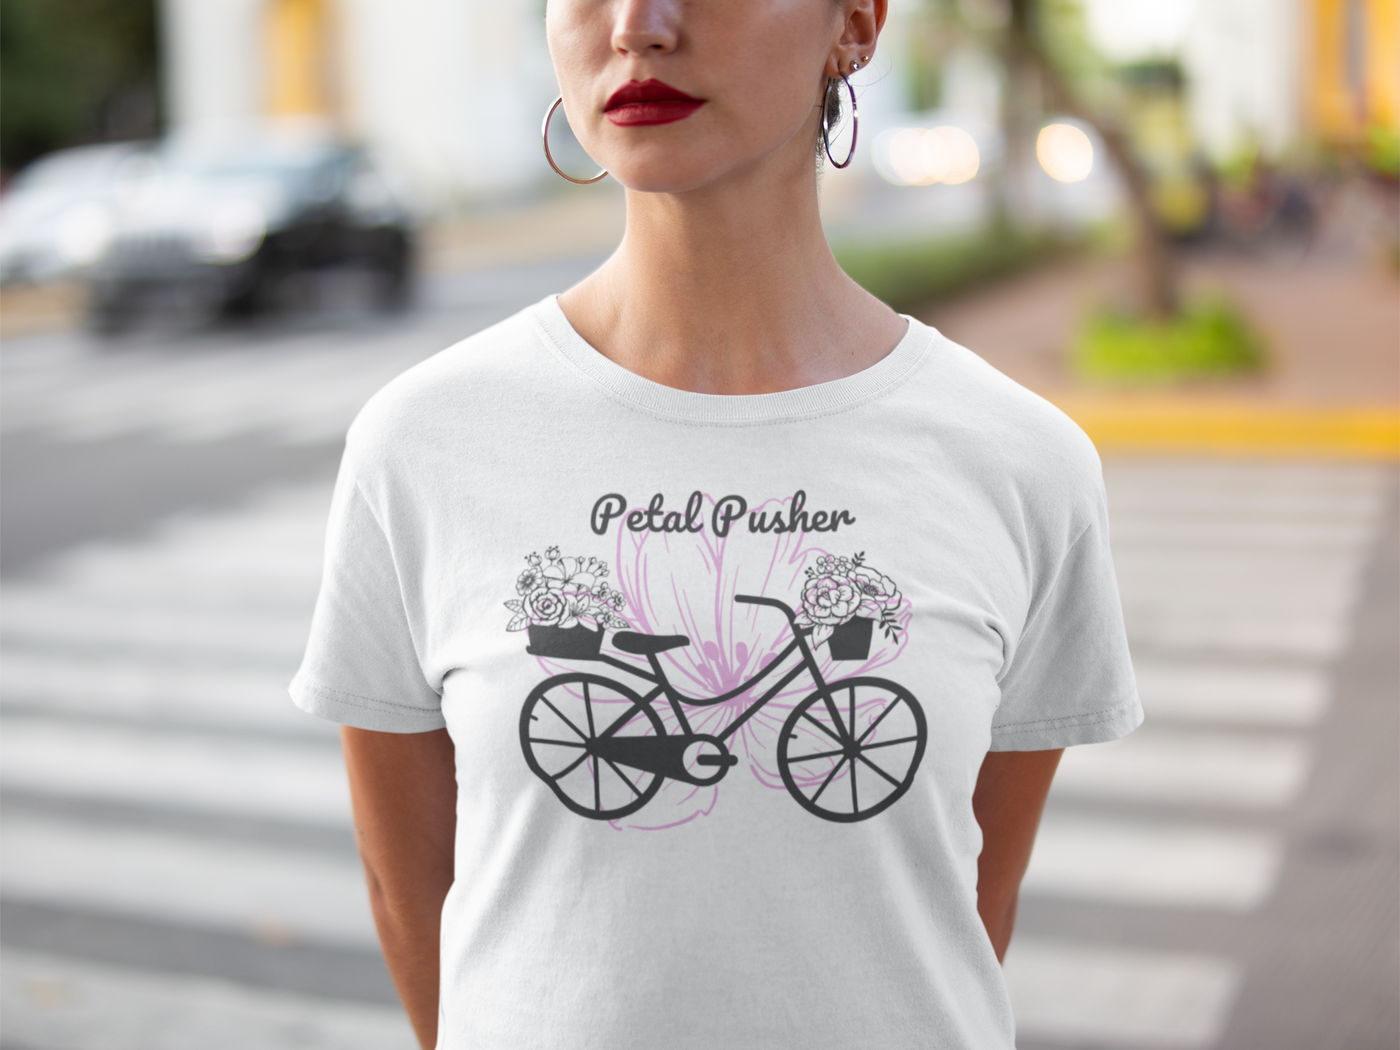 Petal Pusher - Gardening - Plants - Bicycle - Graphic t-shirt